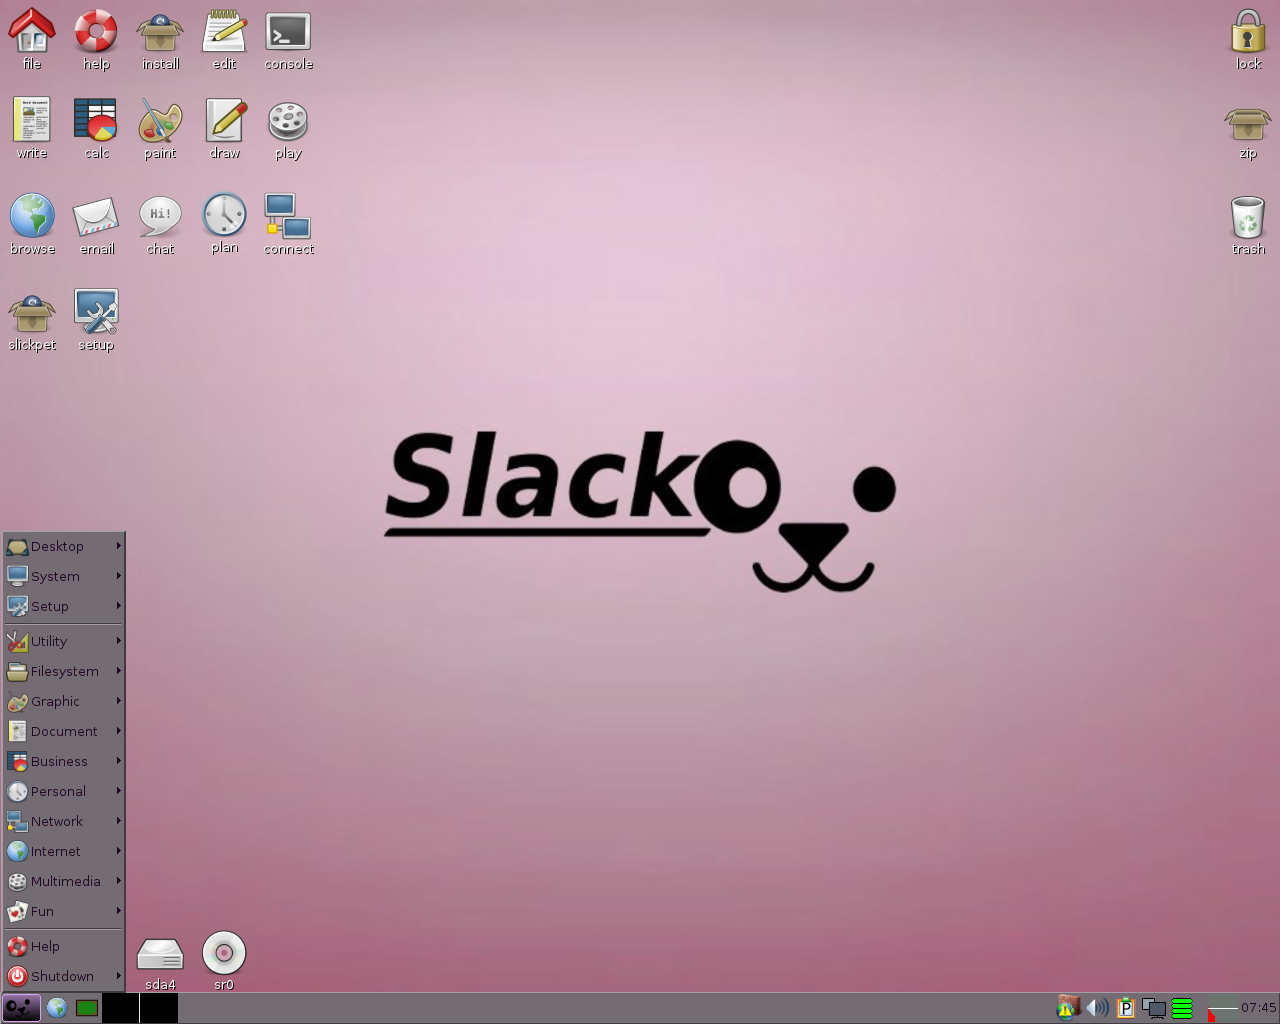 Puppy Linux "Slacko"